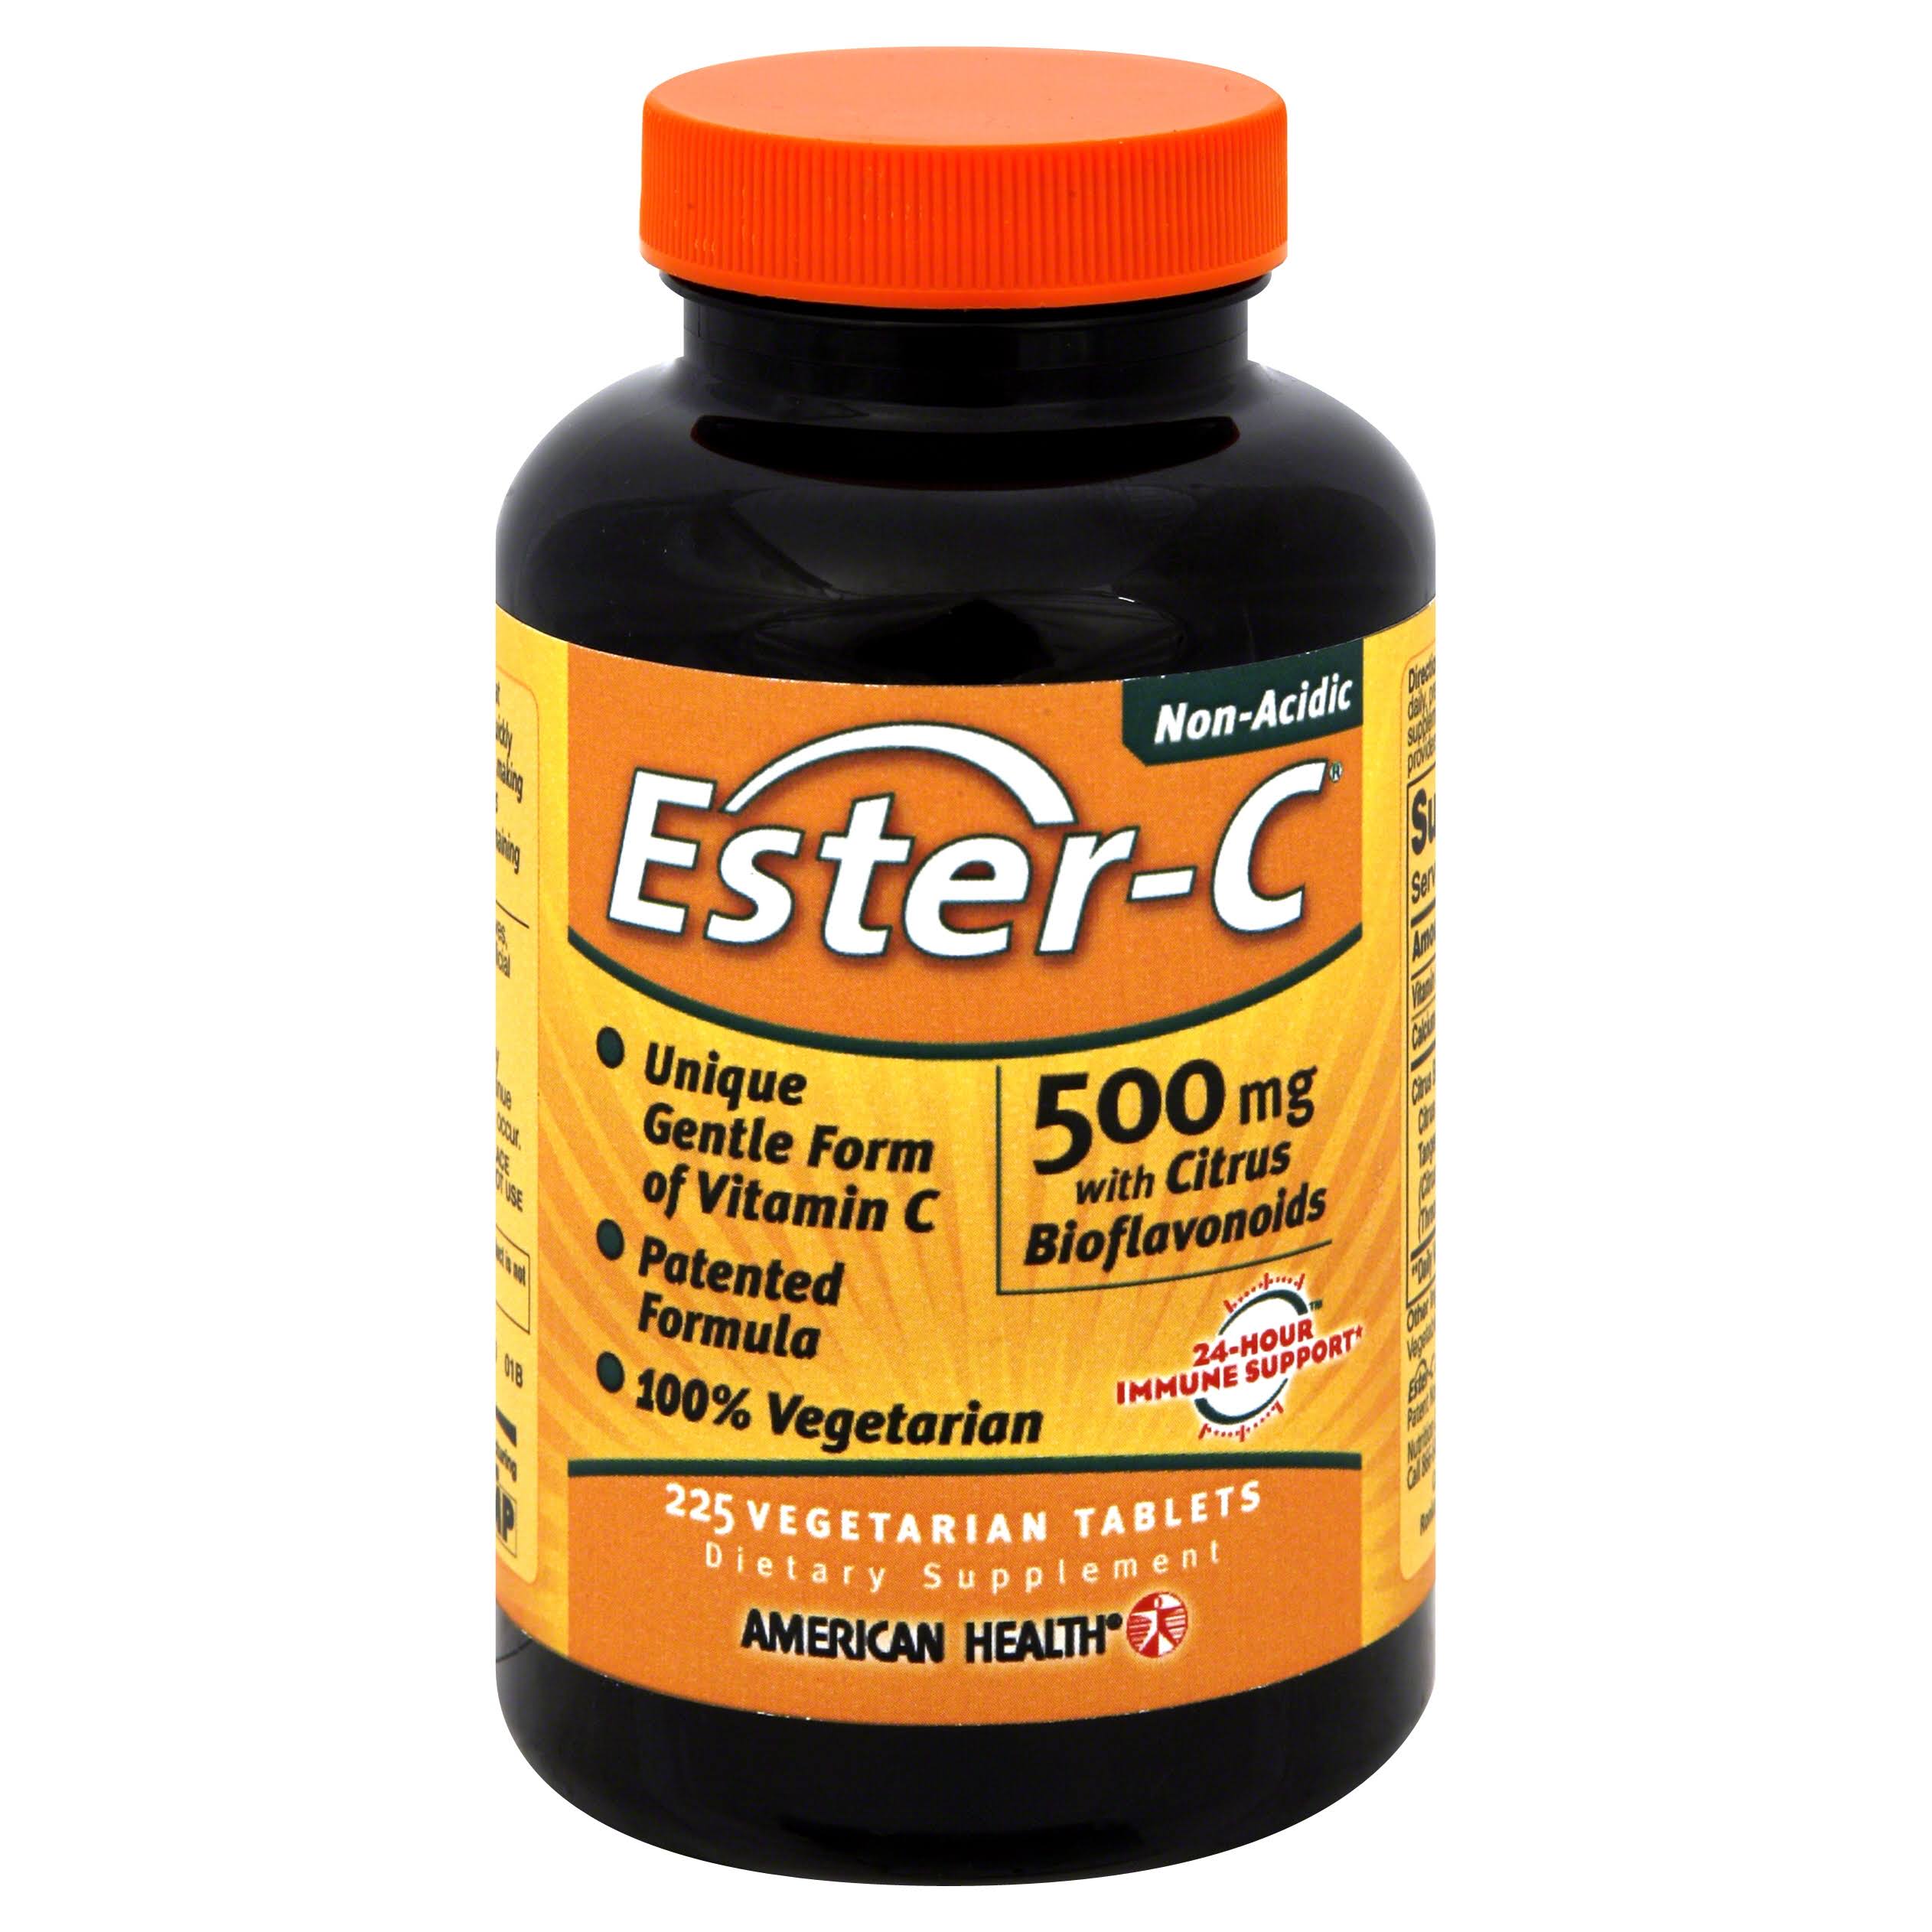 American Health Ester-C with Citrus Bioflavonoids - 500 mg bottle